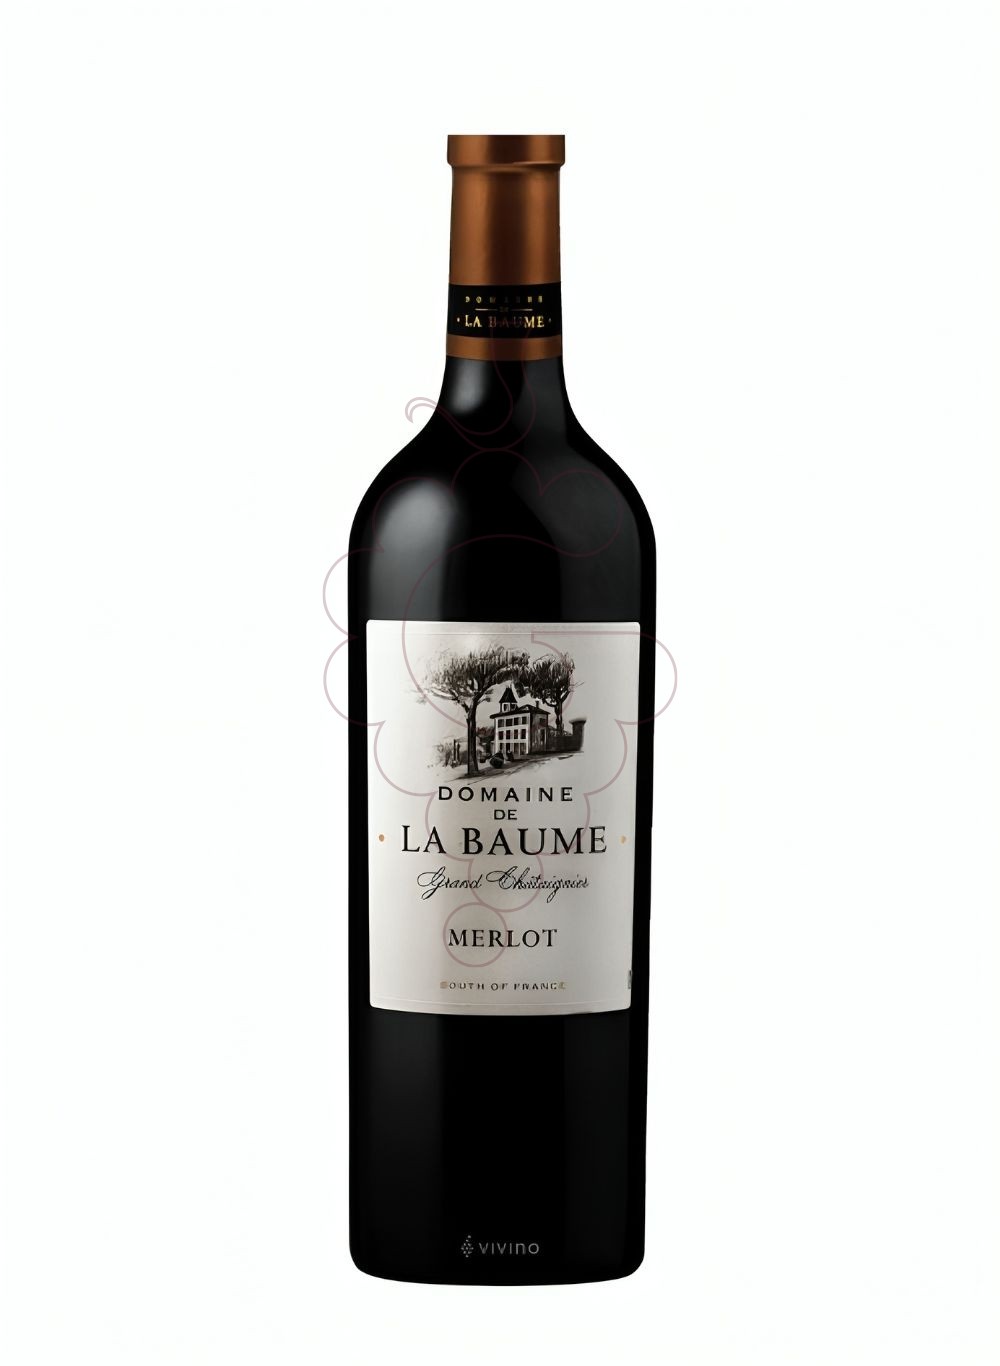 Photo La baume thermes cab-sau ng 22 red wine